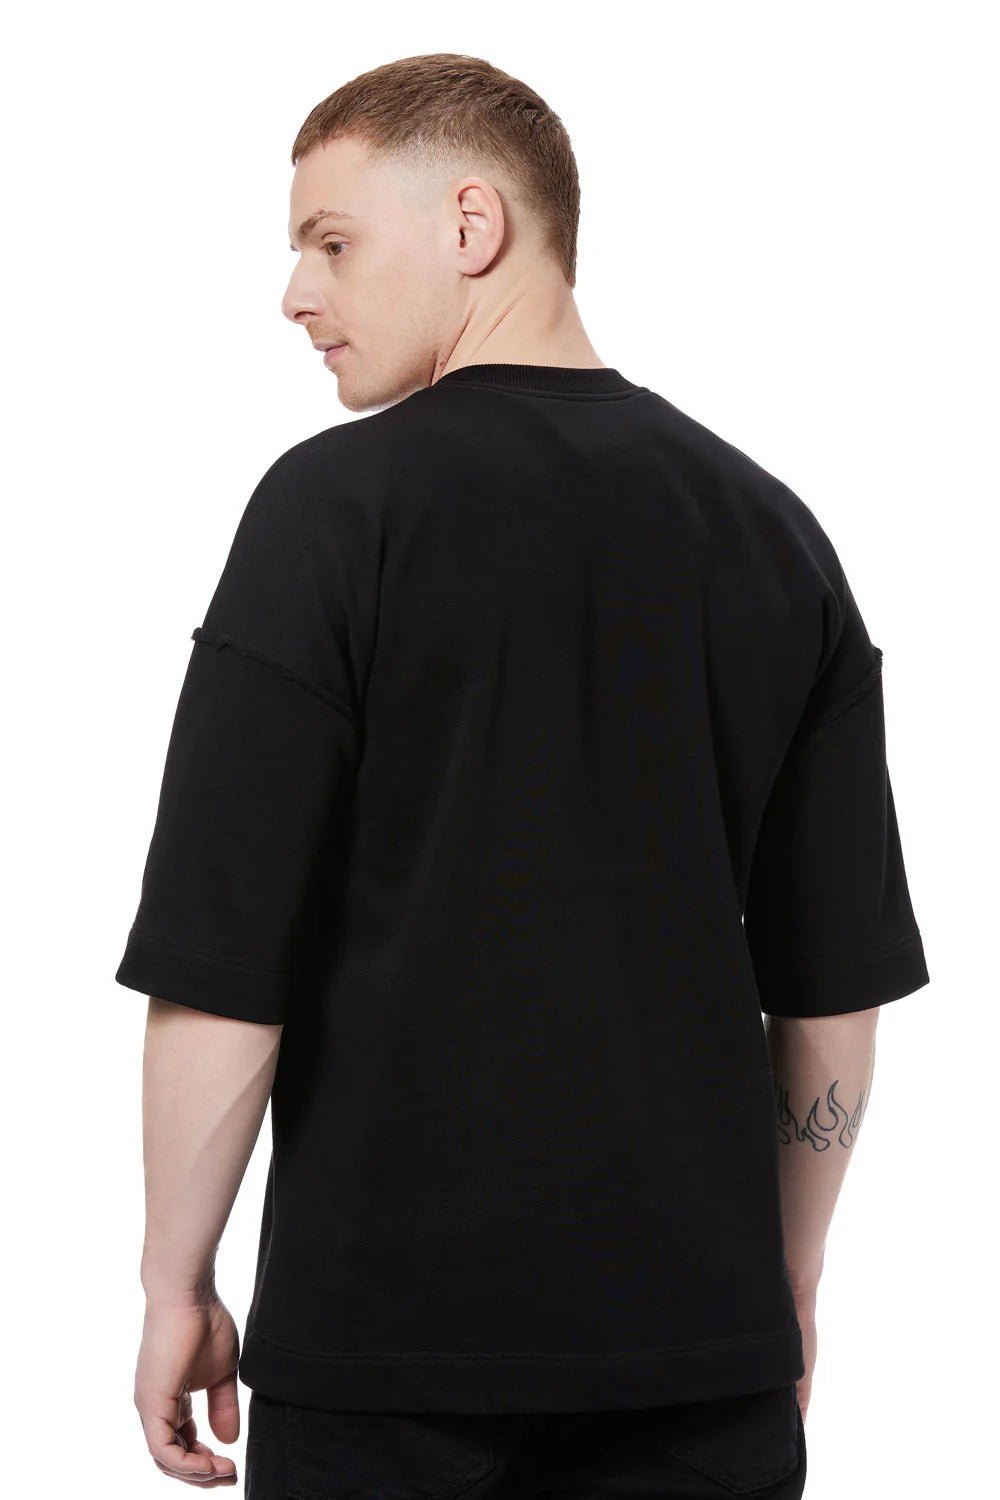 Tricou bărbătesc, negru, brodat Westside, bumbac premium, croială oversized, detalii elegante (guler rotund, umăr căzut).